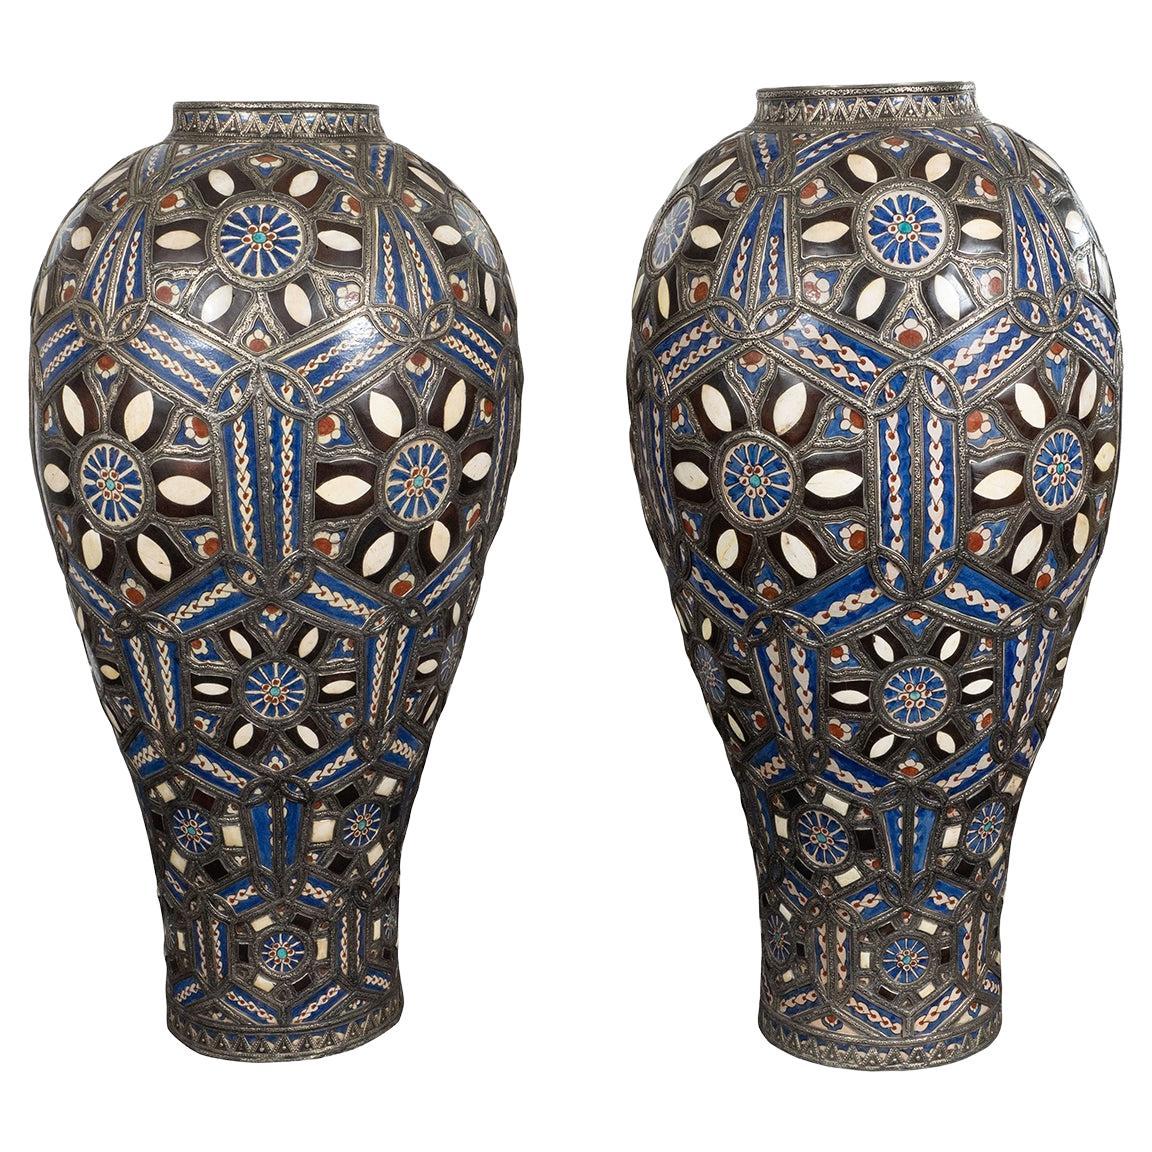 Monumentale, farbenfrohe marokkanische Keramikvasen aus Marokko, Paar im Angebot